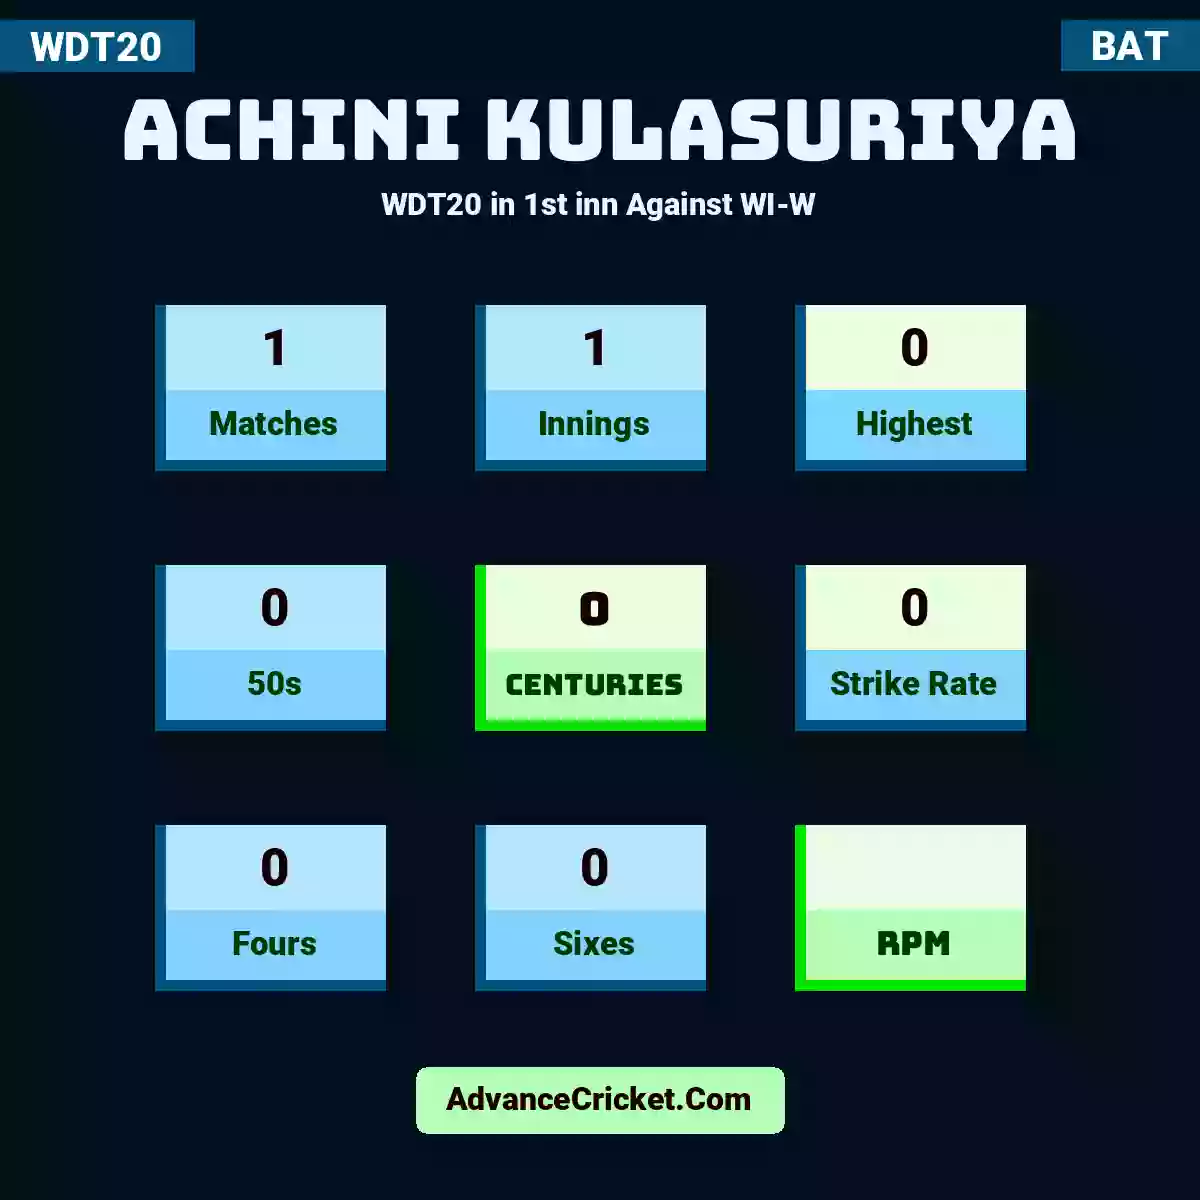 Achini Kulasuriya WDT20  in 1st inn Against WI-W, Achini Kulasuriya played 1 matches, scored 0 runs as highest, 0 half-centuries, and 0 centuries, with a strike rate of 0. A.Kulasuriya hit 0 fours and 0 sixes.